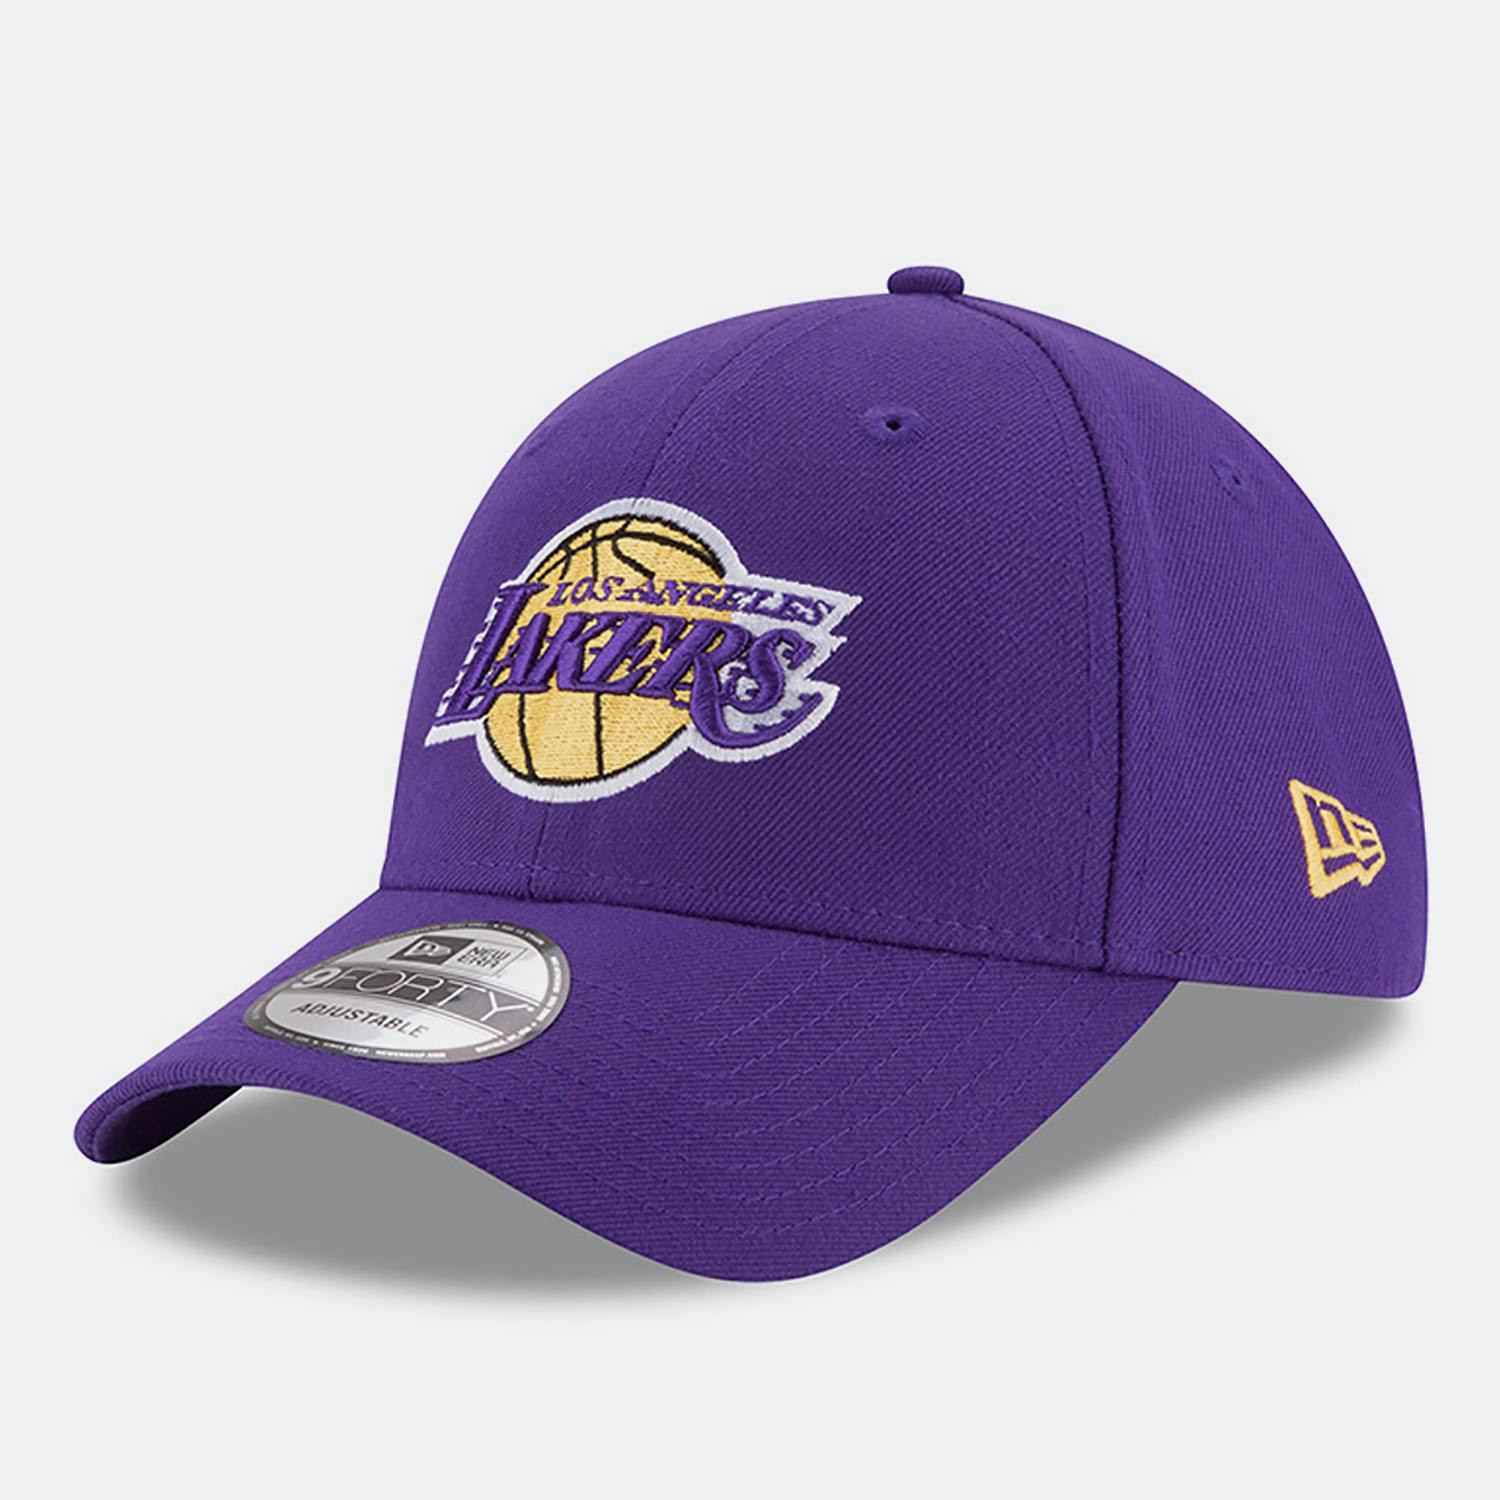 New Era Los Angeles Lakers Otc (9000040724_41964)